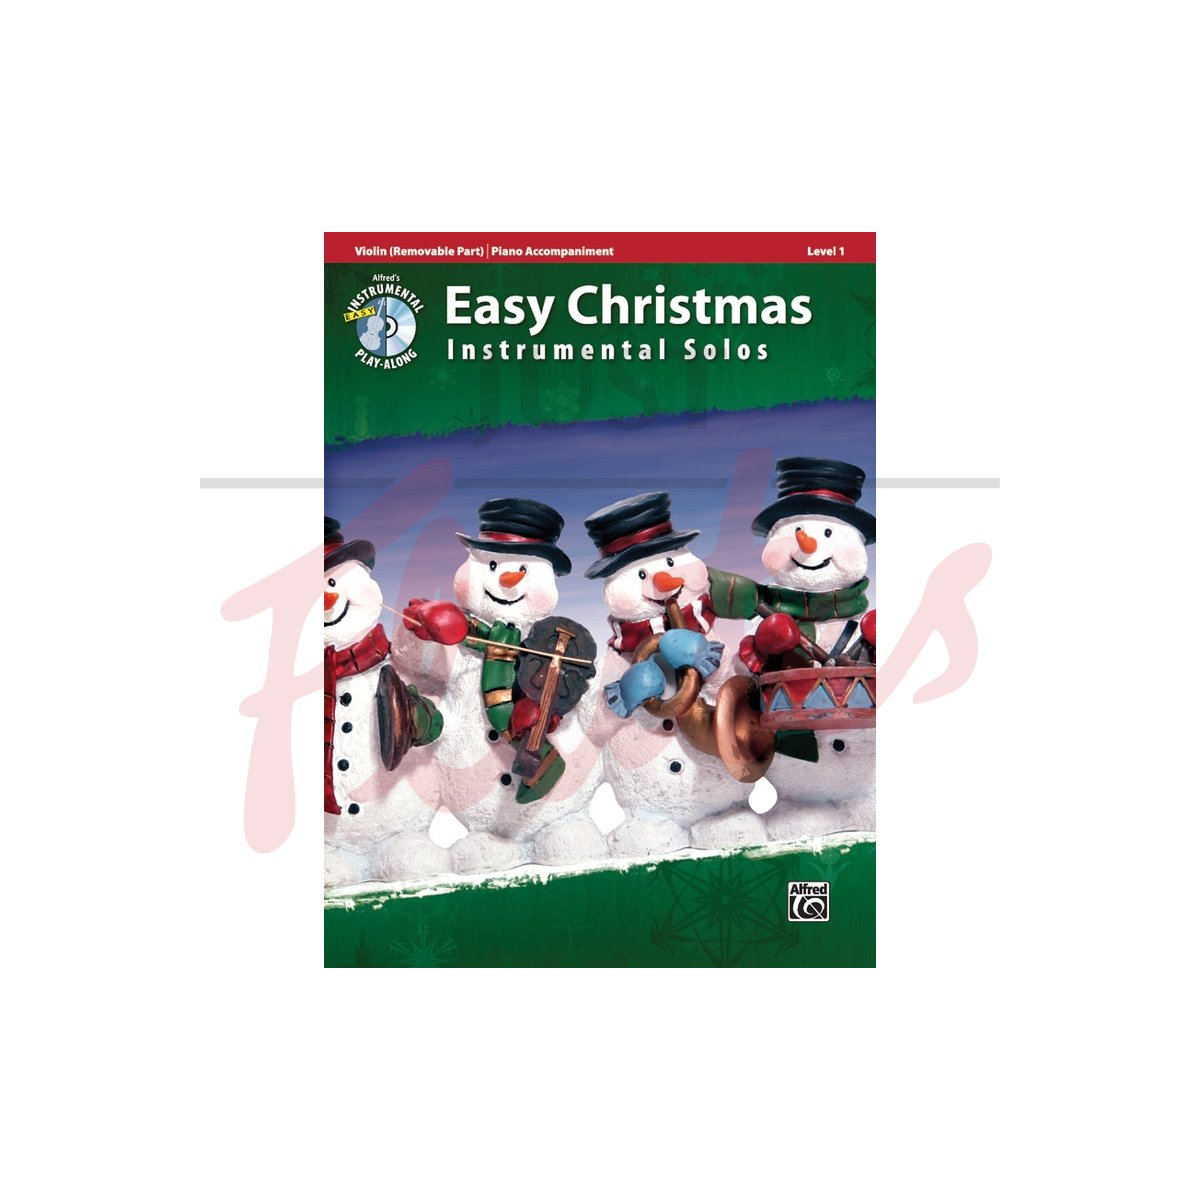 Easy Christmas Instrumental Solos [Violin]